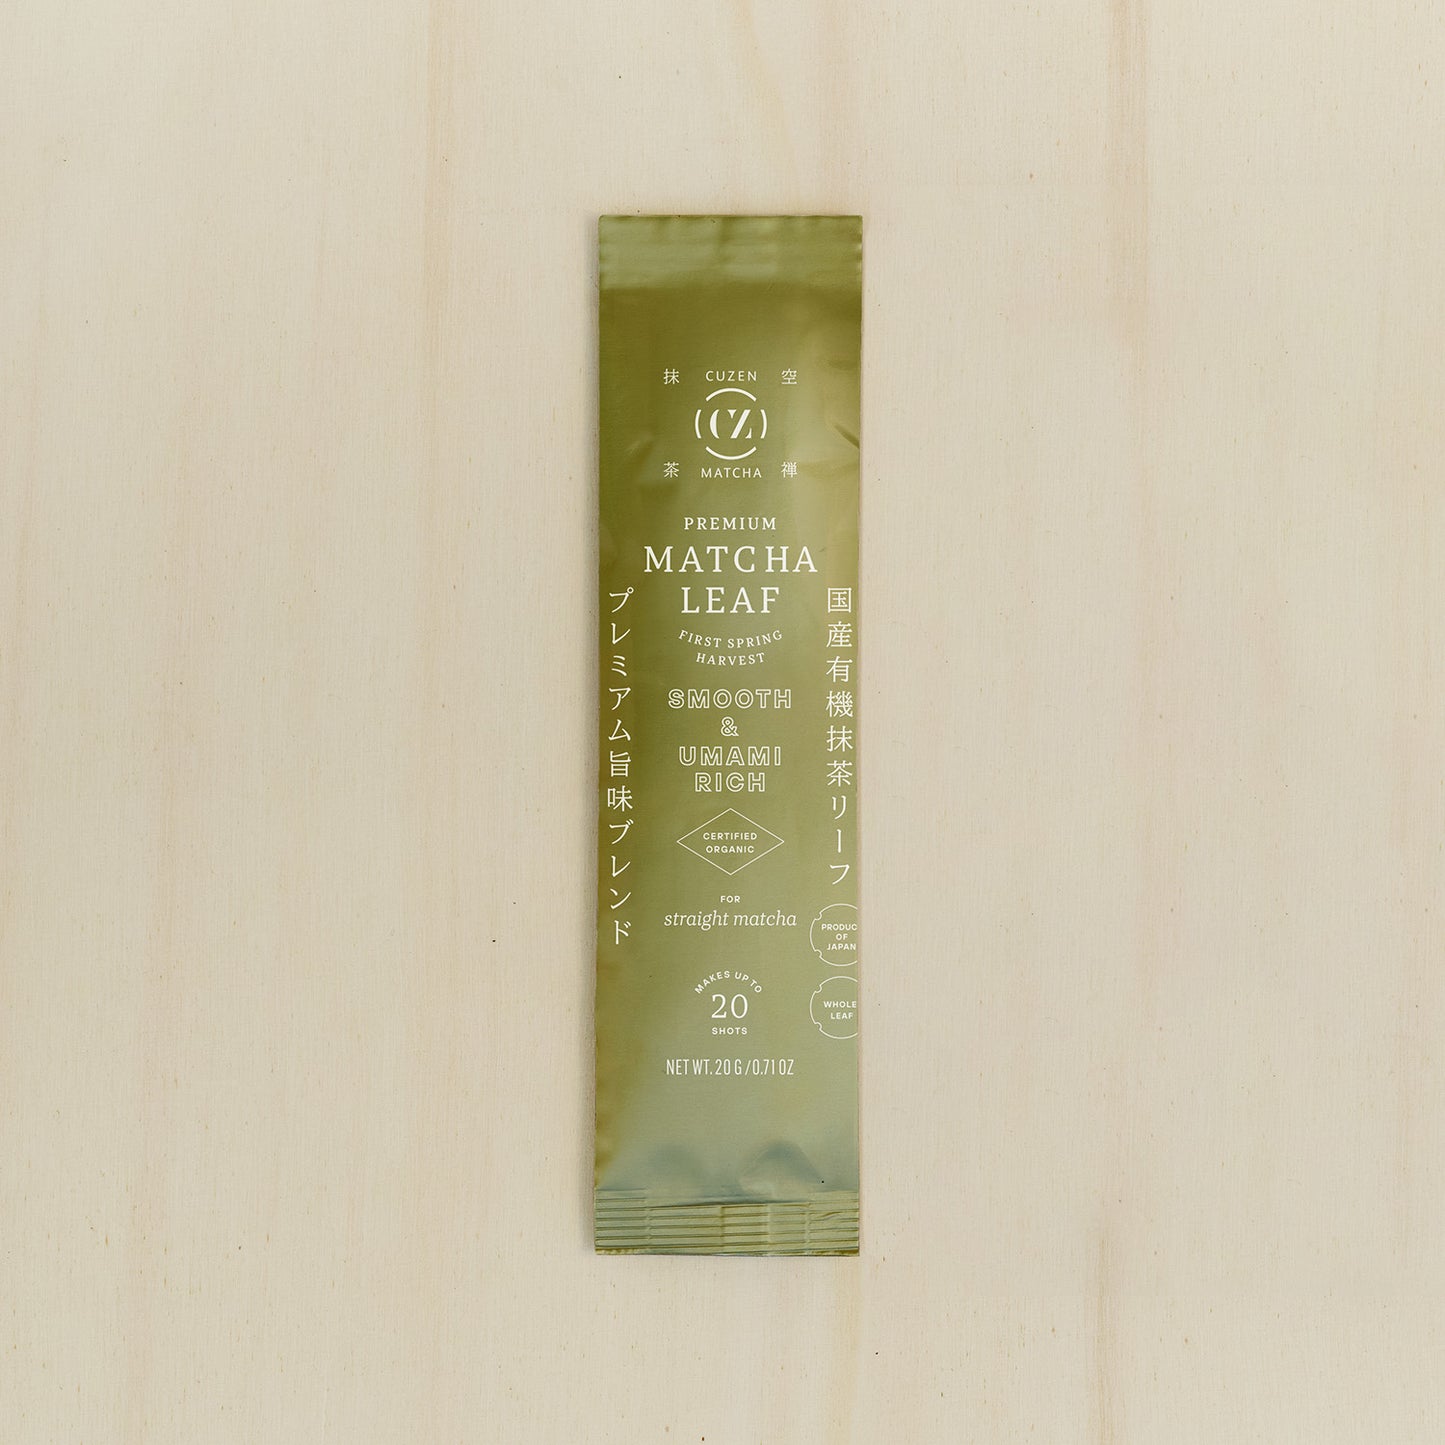 A gold-colored, 20-gram packet of Cuzen’s Premium Matcha Leaf.